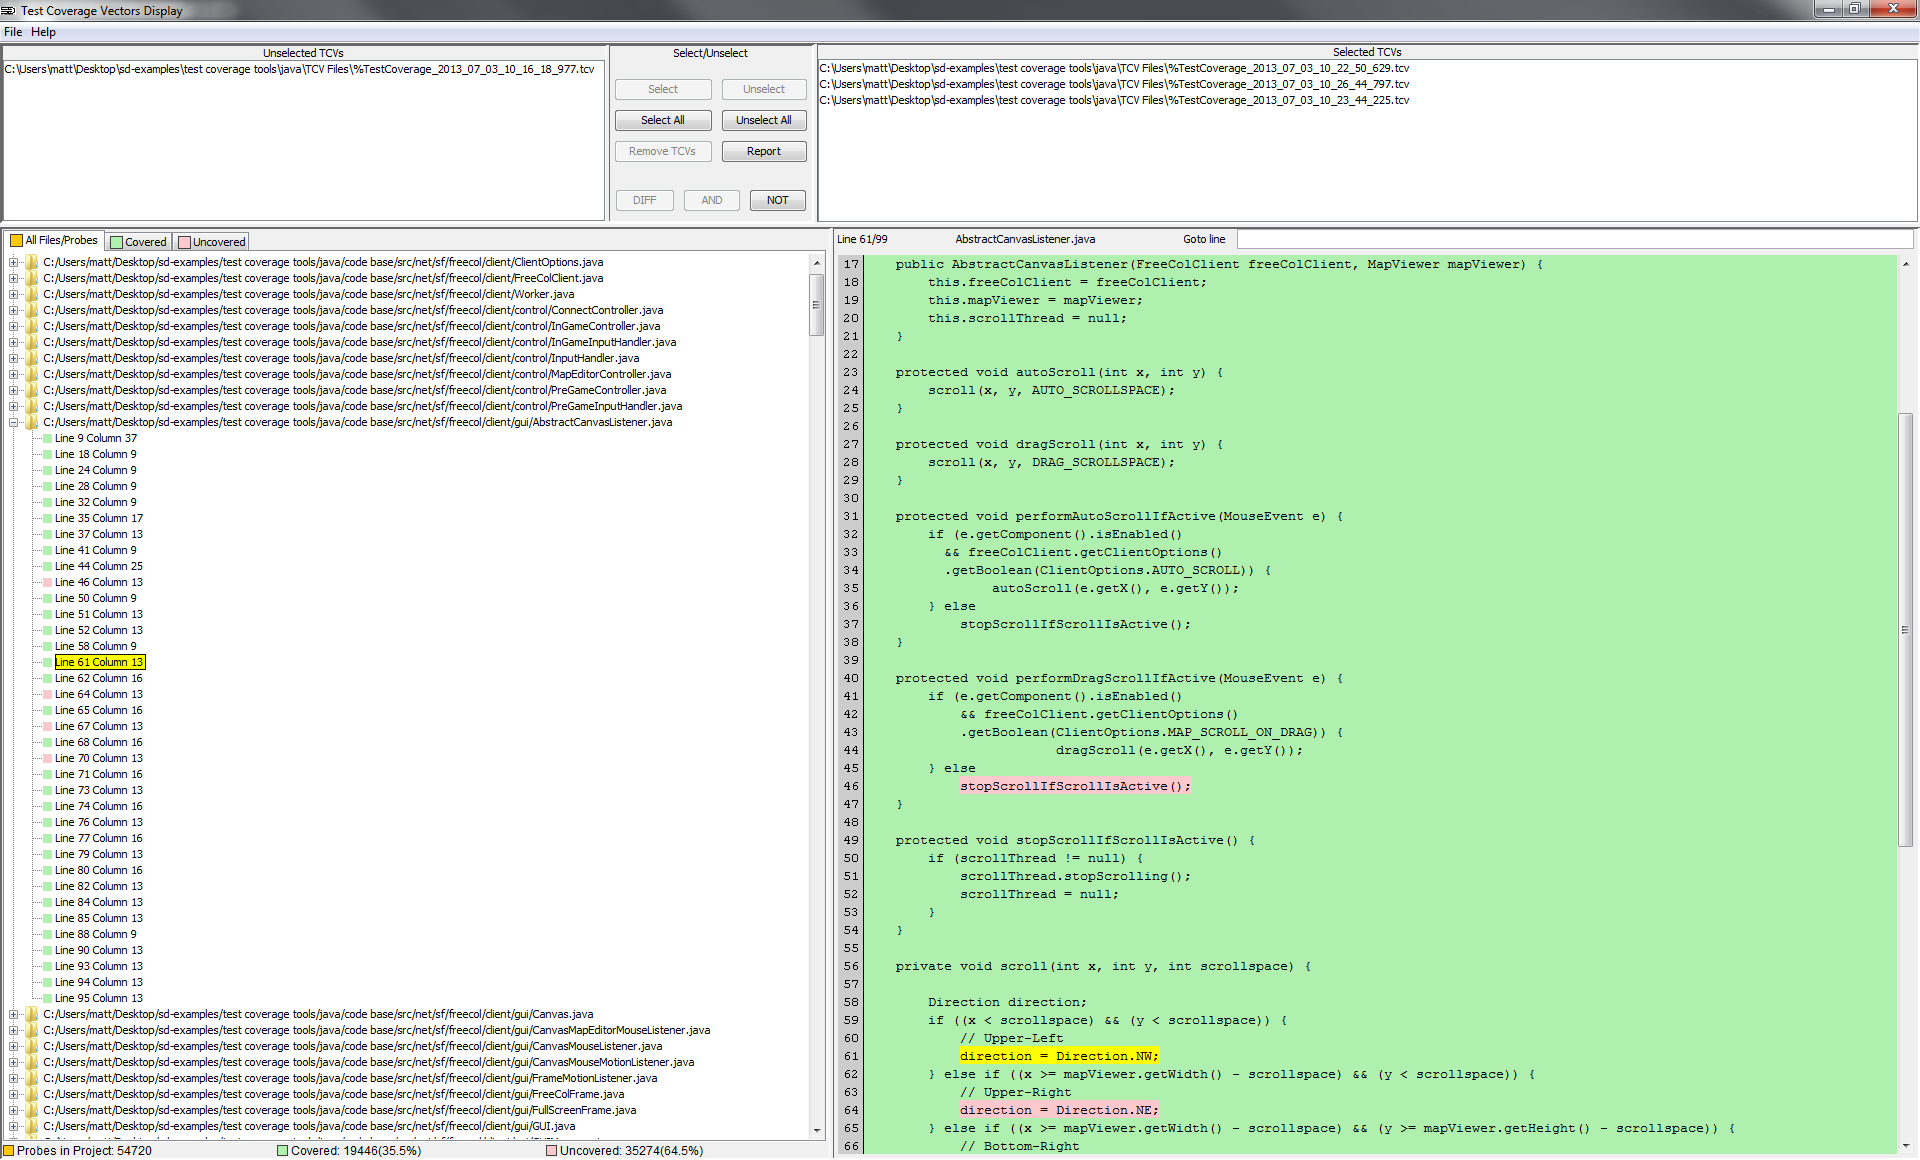 Java Test Coverage Display screen shot